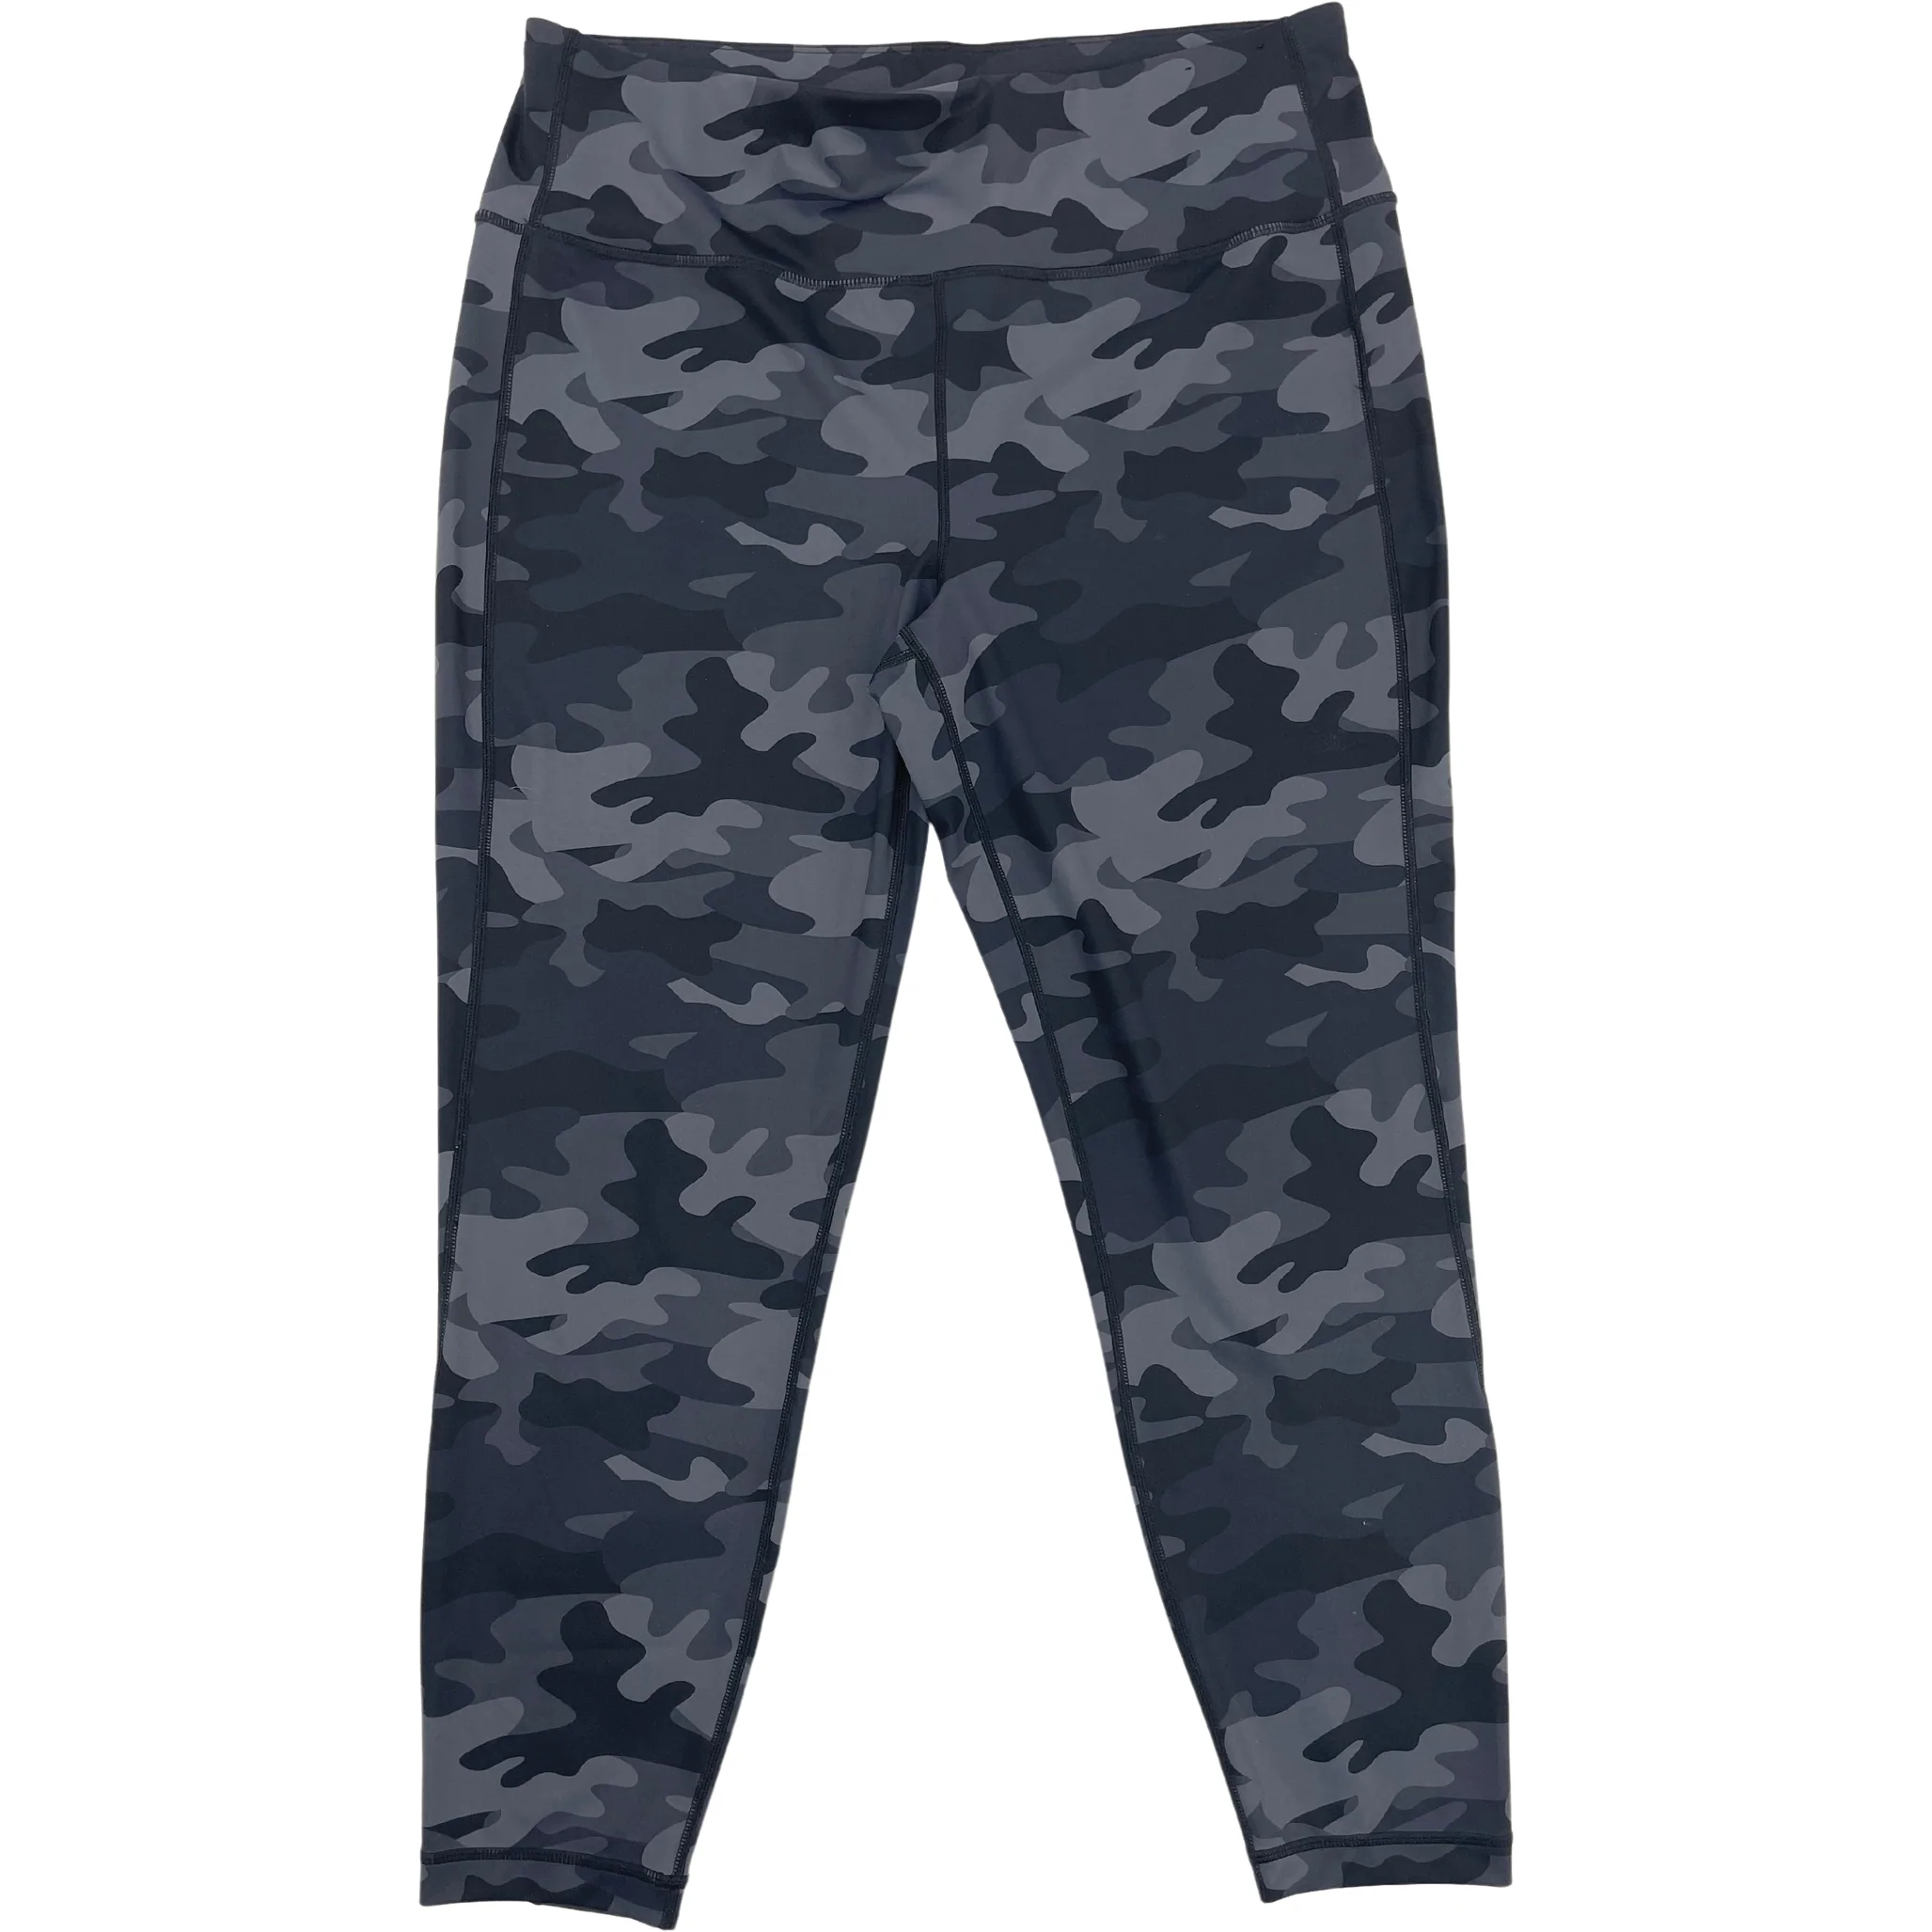 Lolë Women's Leggings / Camouflage Pattern / Black & Grey / Various Sizes